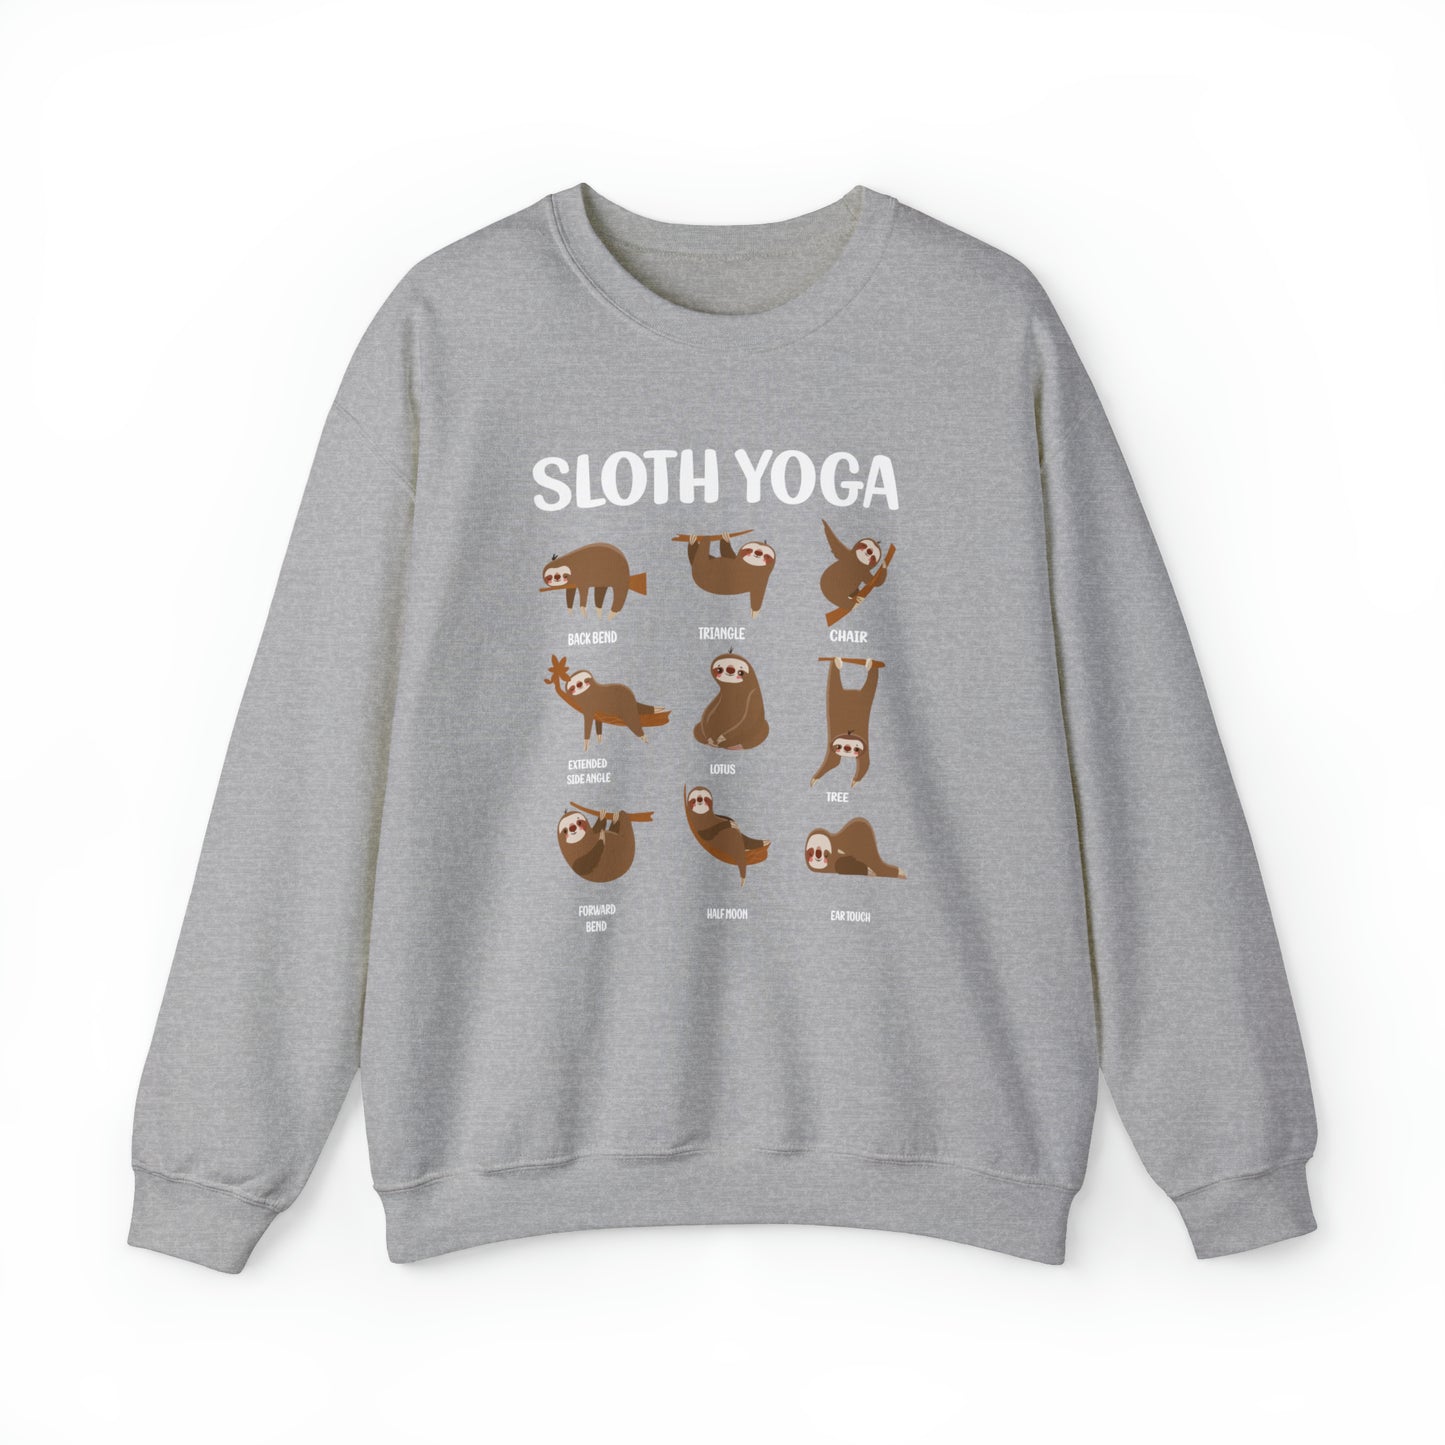 Sloth Yoga Sweatshirt Sloth Lovers Crewneck Sweatshirt Yoga Lovers Shirt